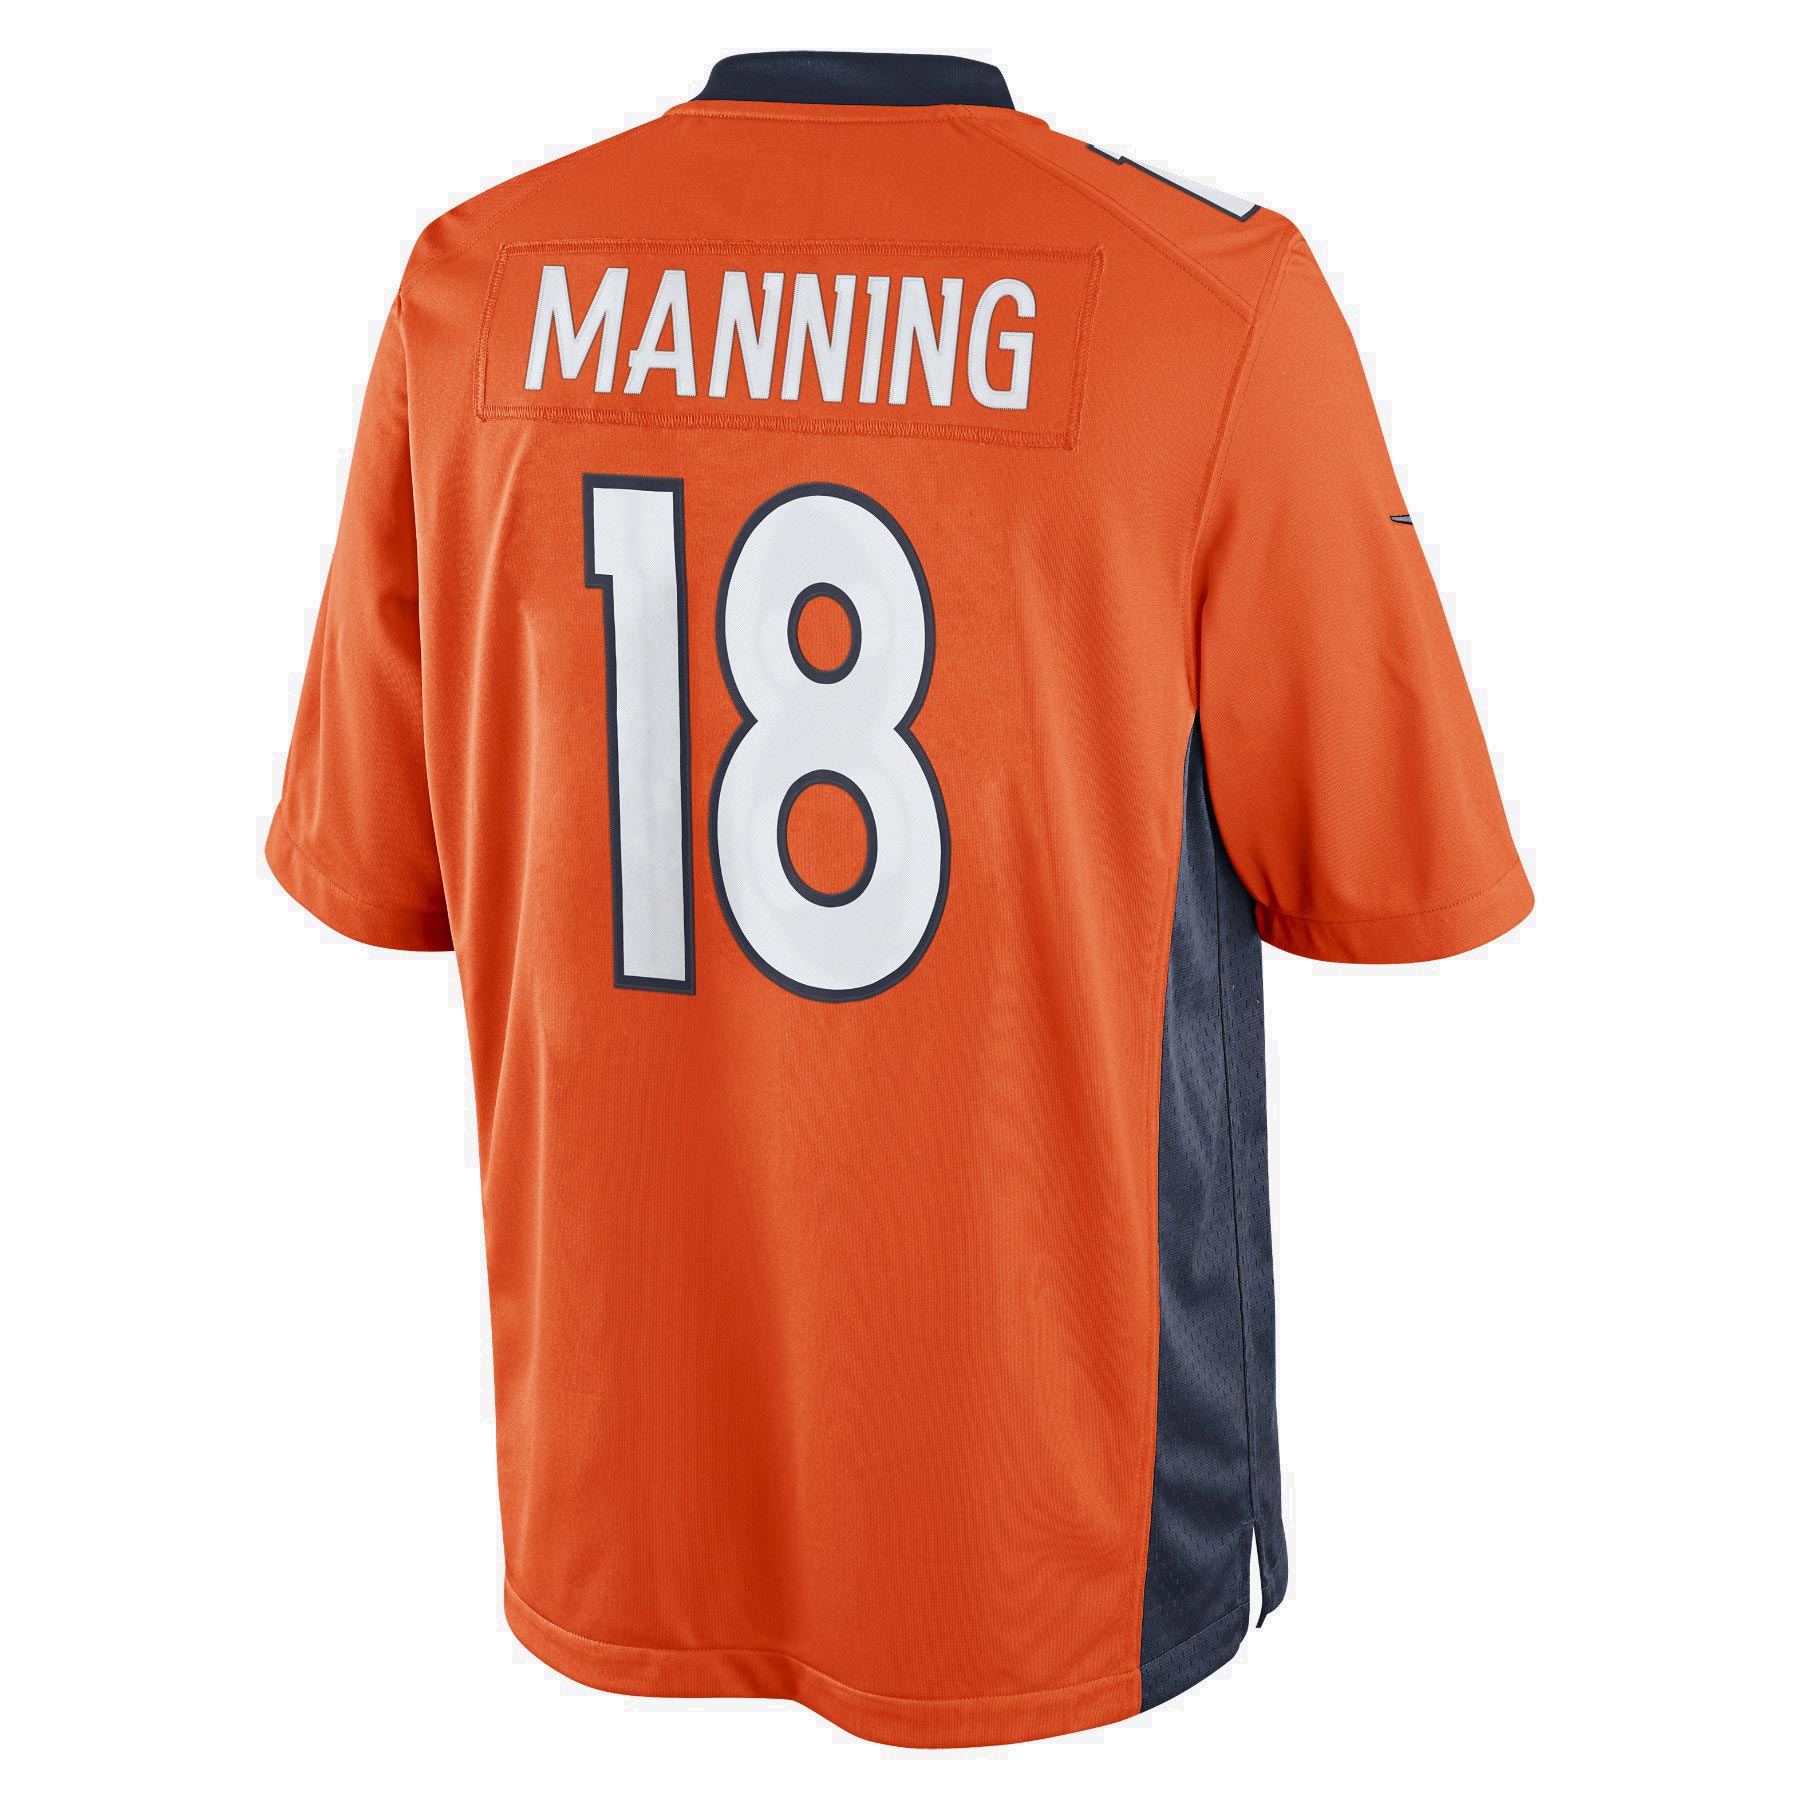 Image search Denver Broncos New Uniforms